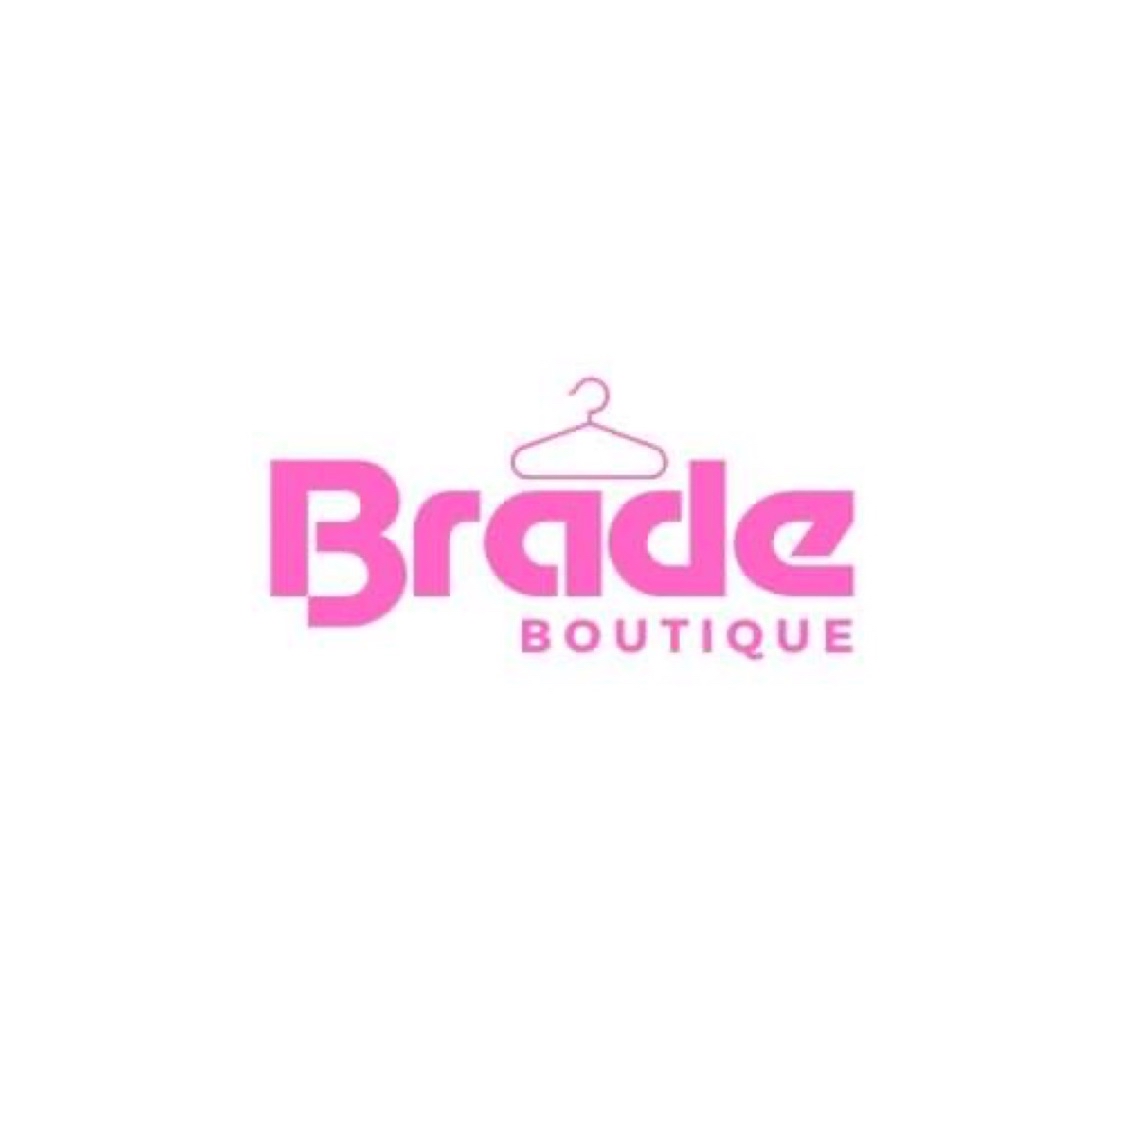 Brade boutique, Online Shop | Shopee Philippines